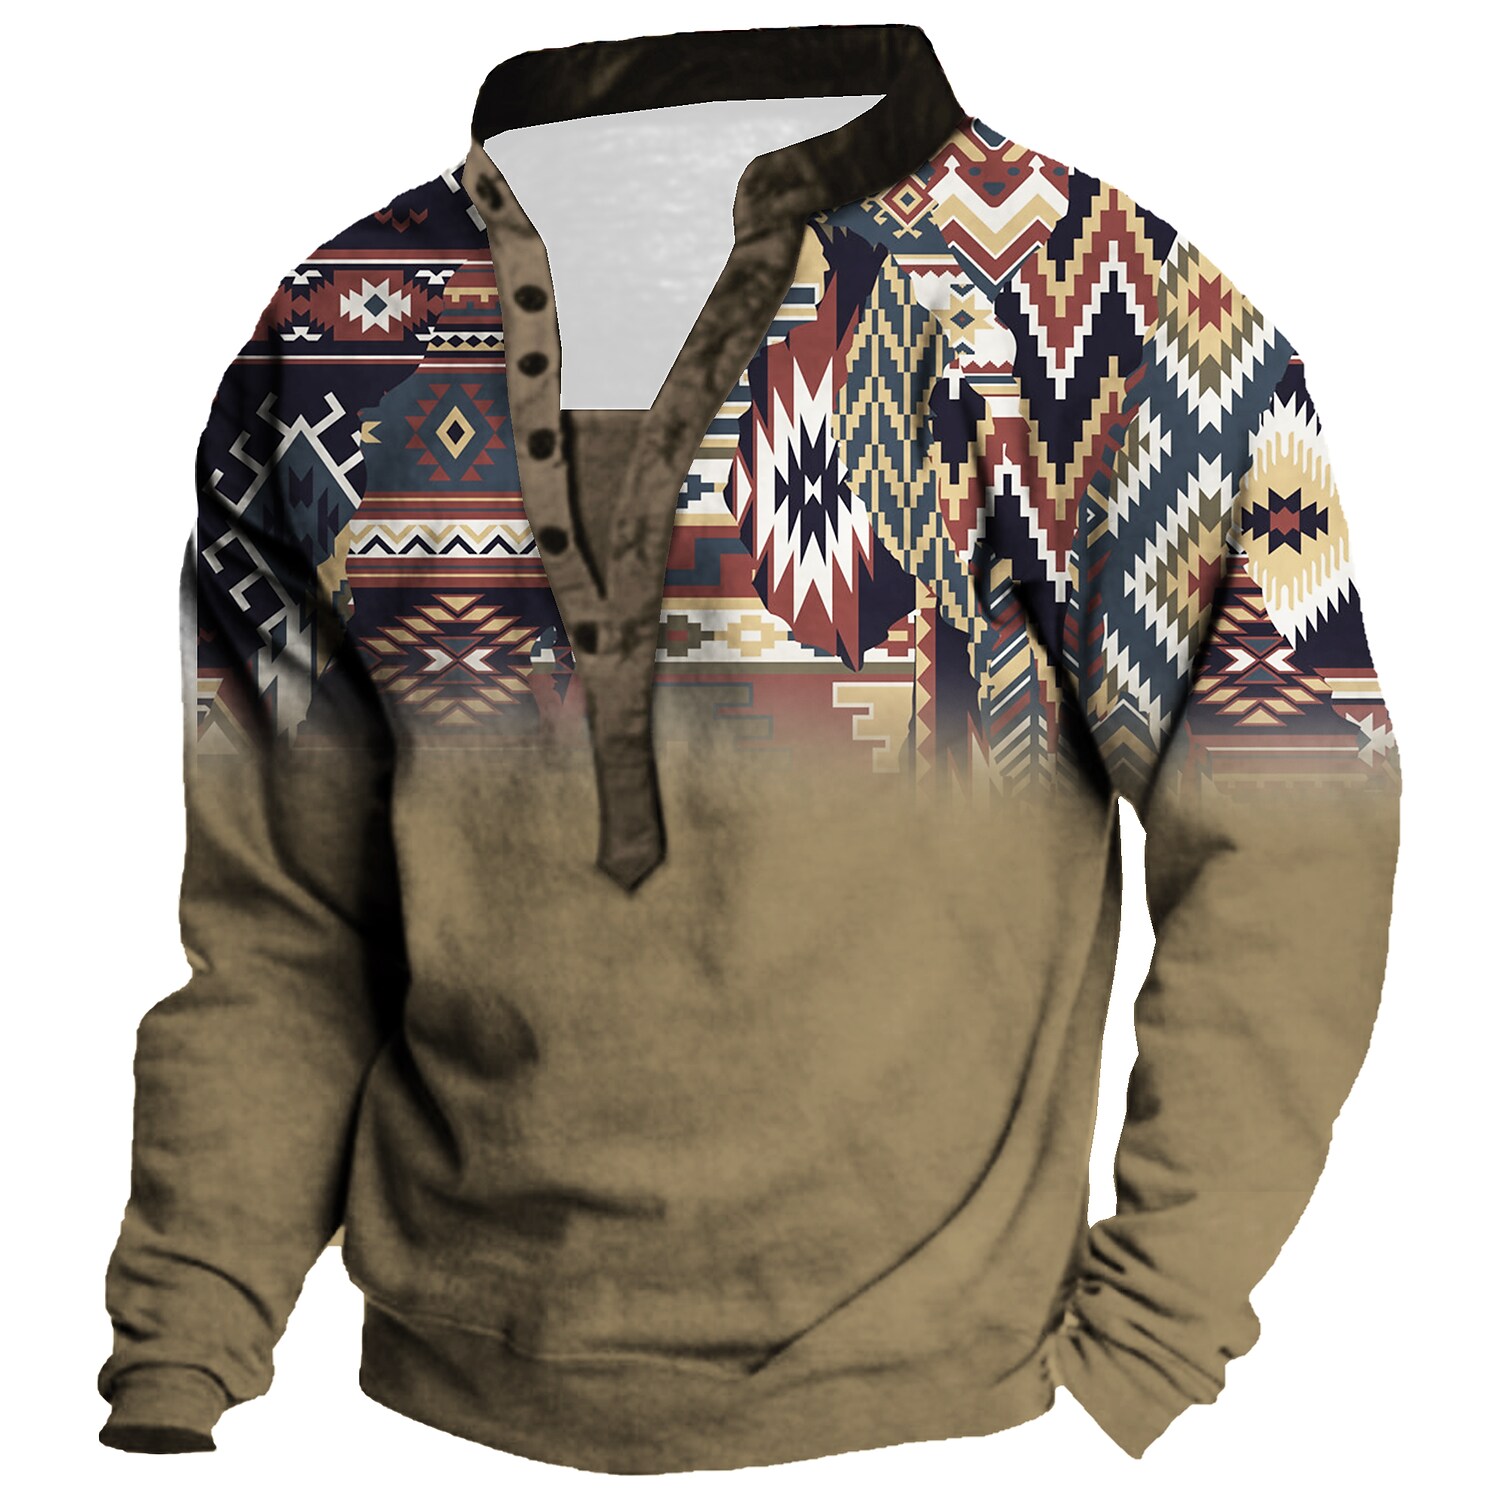 Printrendy Men's Pullover 3D Print Button Up Hoodie Color Block Graphic Prints Sweatshirts